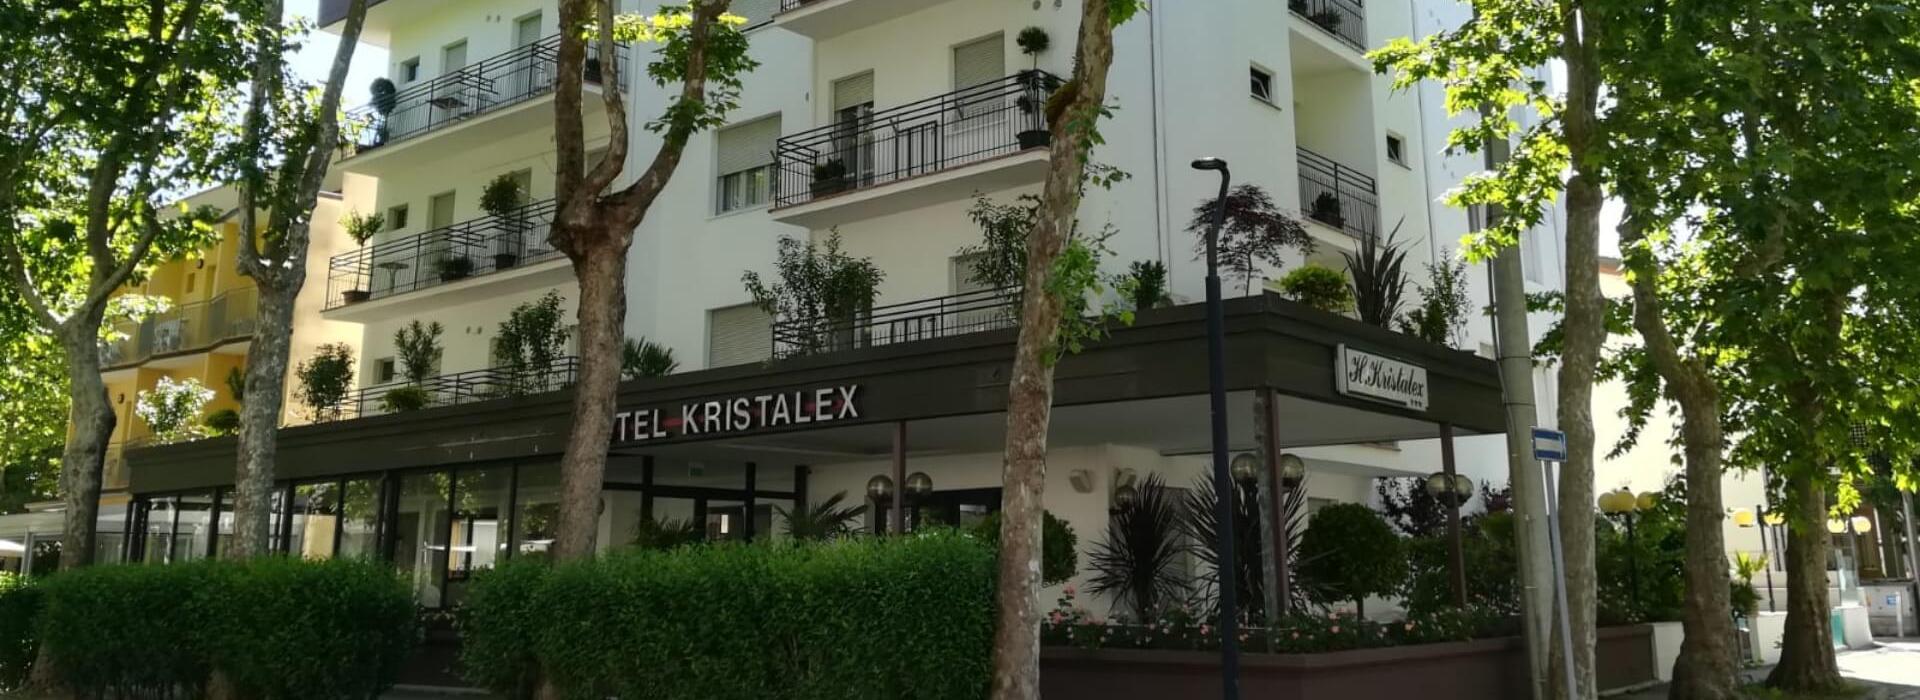 hotelkristalex en long-weekend-of-1-may-in-cesenatico-in-pet-friendly-hotel-with-outdoor-jacuzzi 017